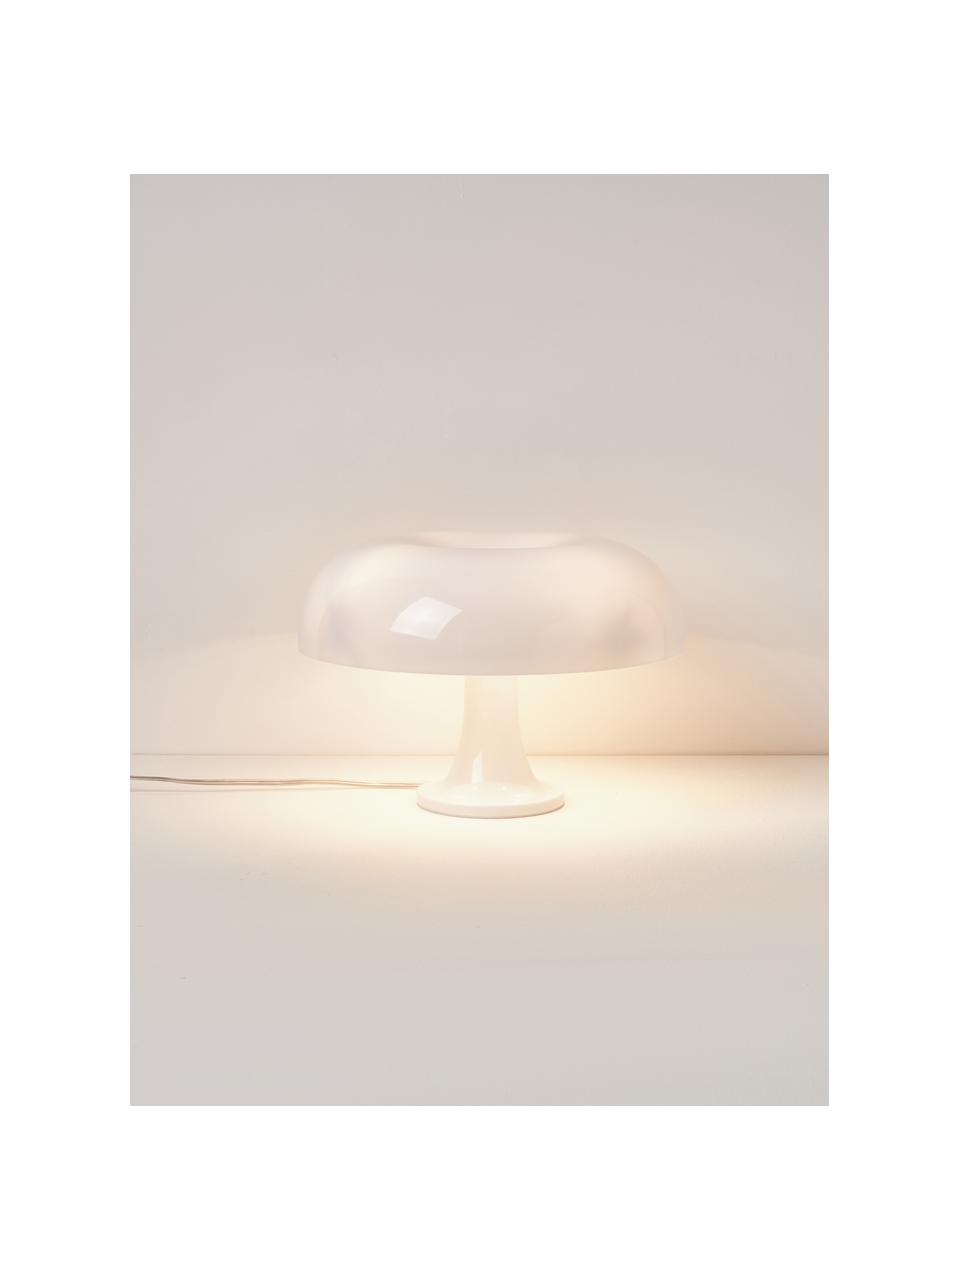 Lampe à poser Nessino, Polycarbonate, Blanc, Ø 32 x haut. 22 cm